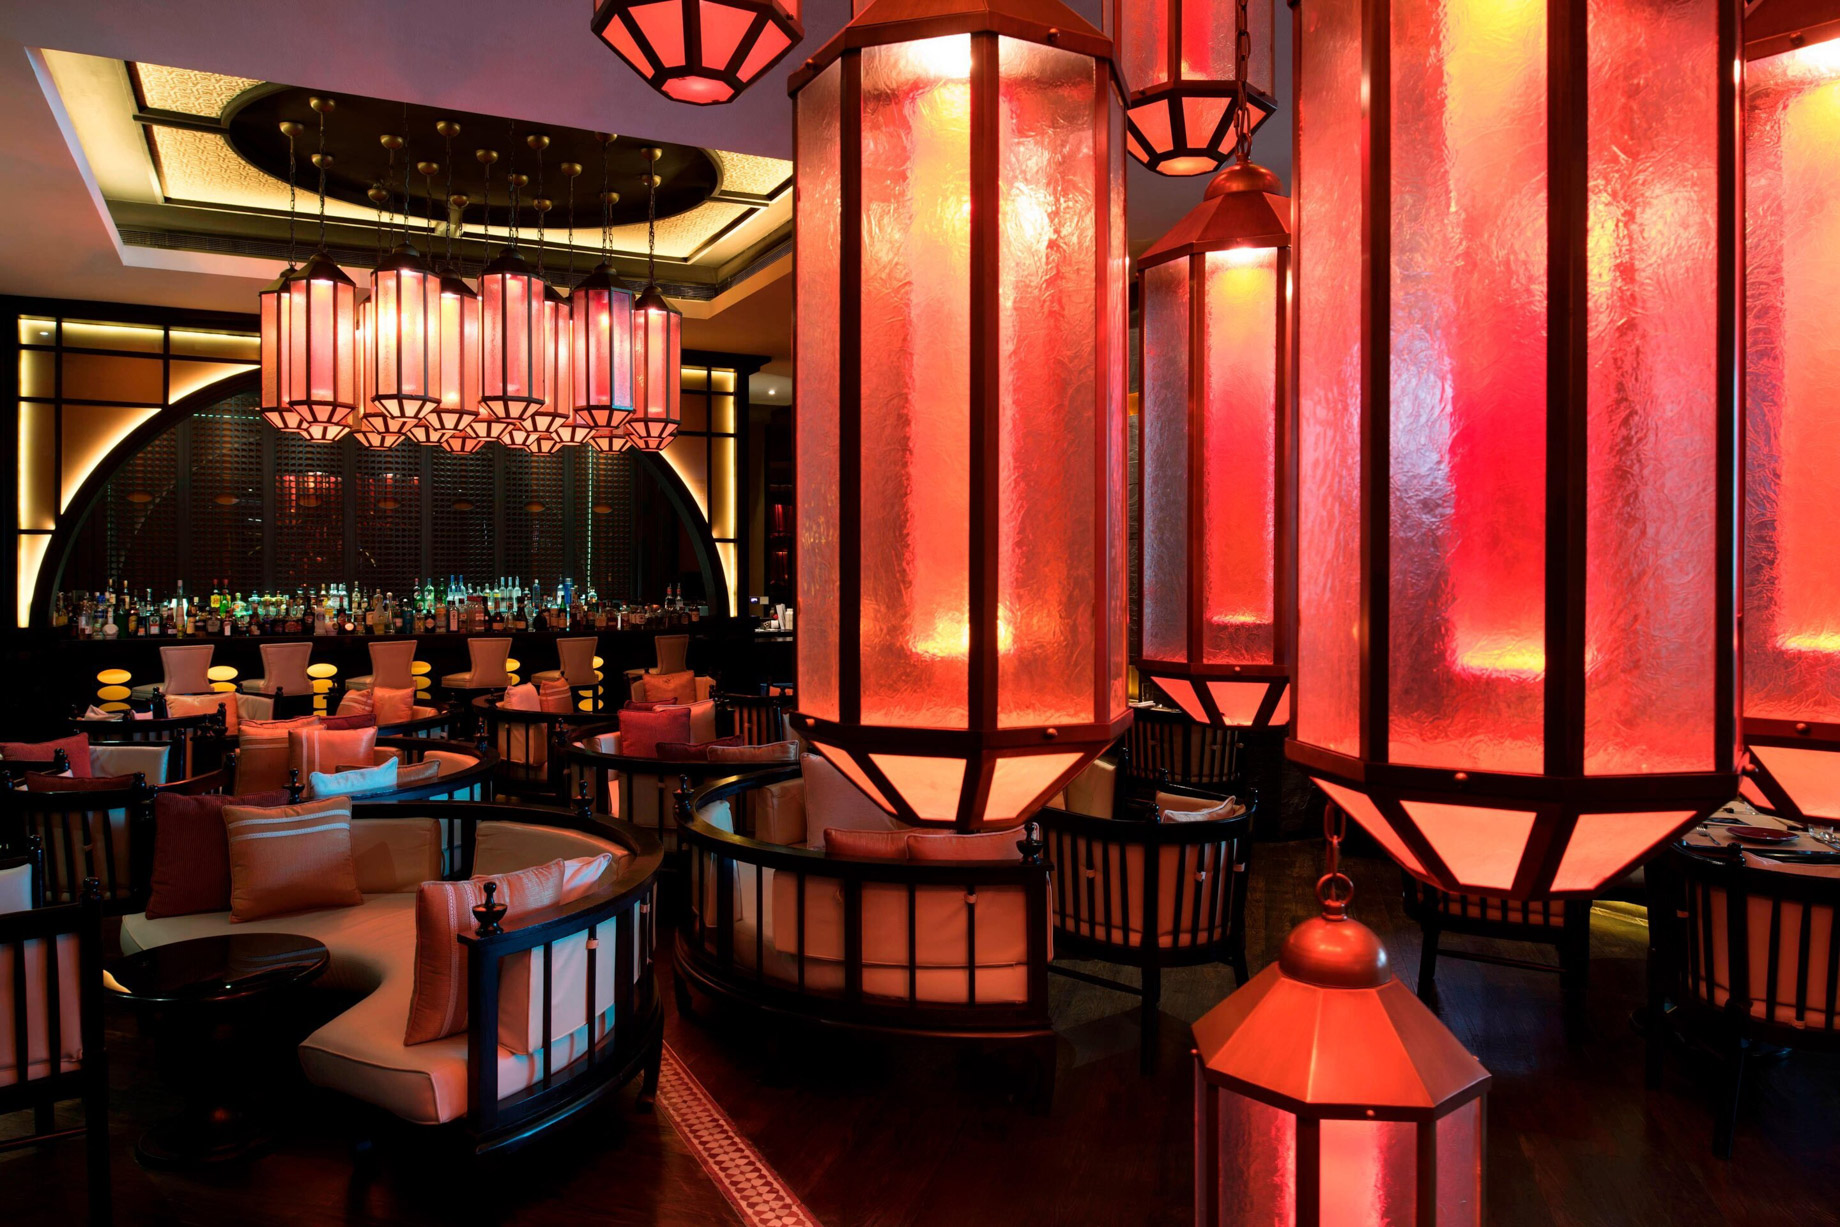 W Doha Hotel - Doha, Qatar - Spice Market Restaurant Bar Area